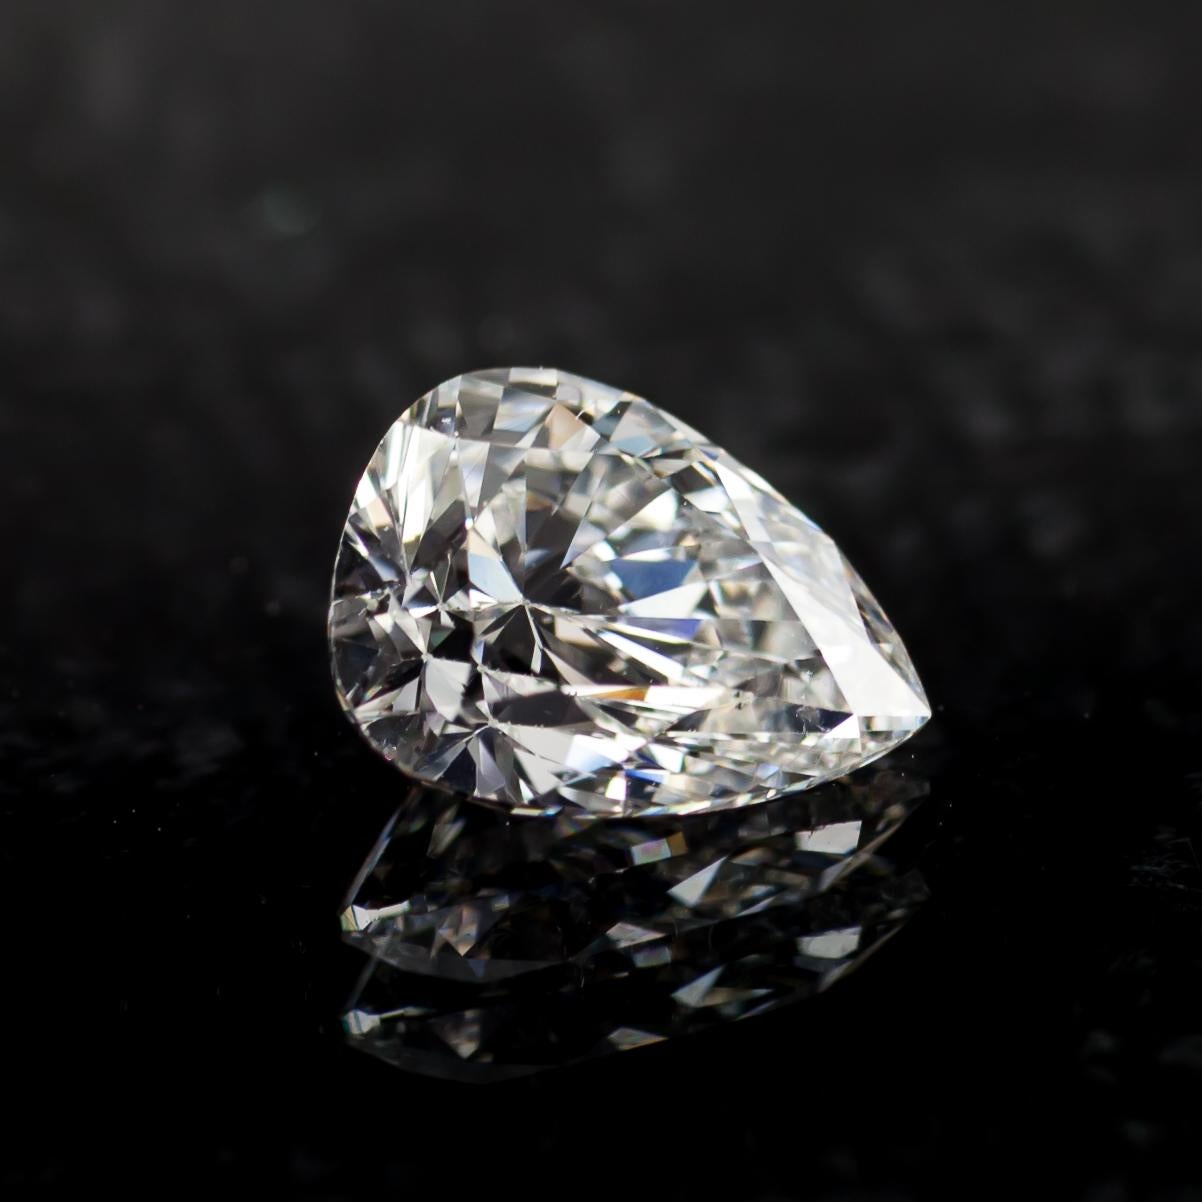 Diamond General Info
Diamond Cut: Pear Shaped
Measurements: 7.88  x  5.97  -  3.86 mm

Diamond Grading Results
Carat Weight: 1.12
Color Grade: G
Clarity Grade: VS2

Additional Grading Information 
Polish: Good
Symmetry:Good
Fluorescence: Faint